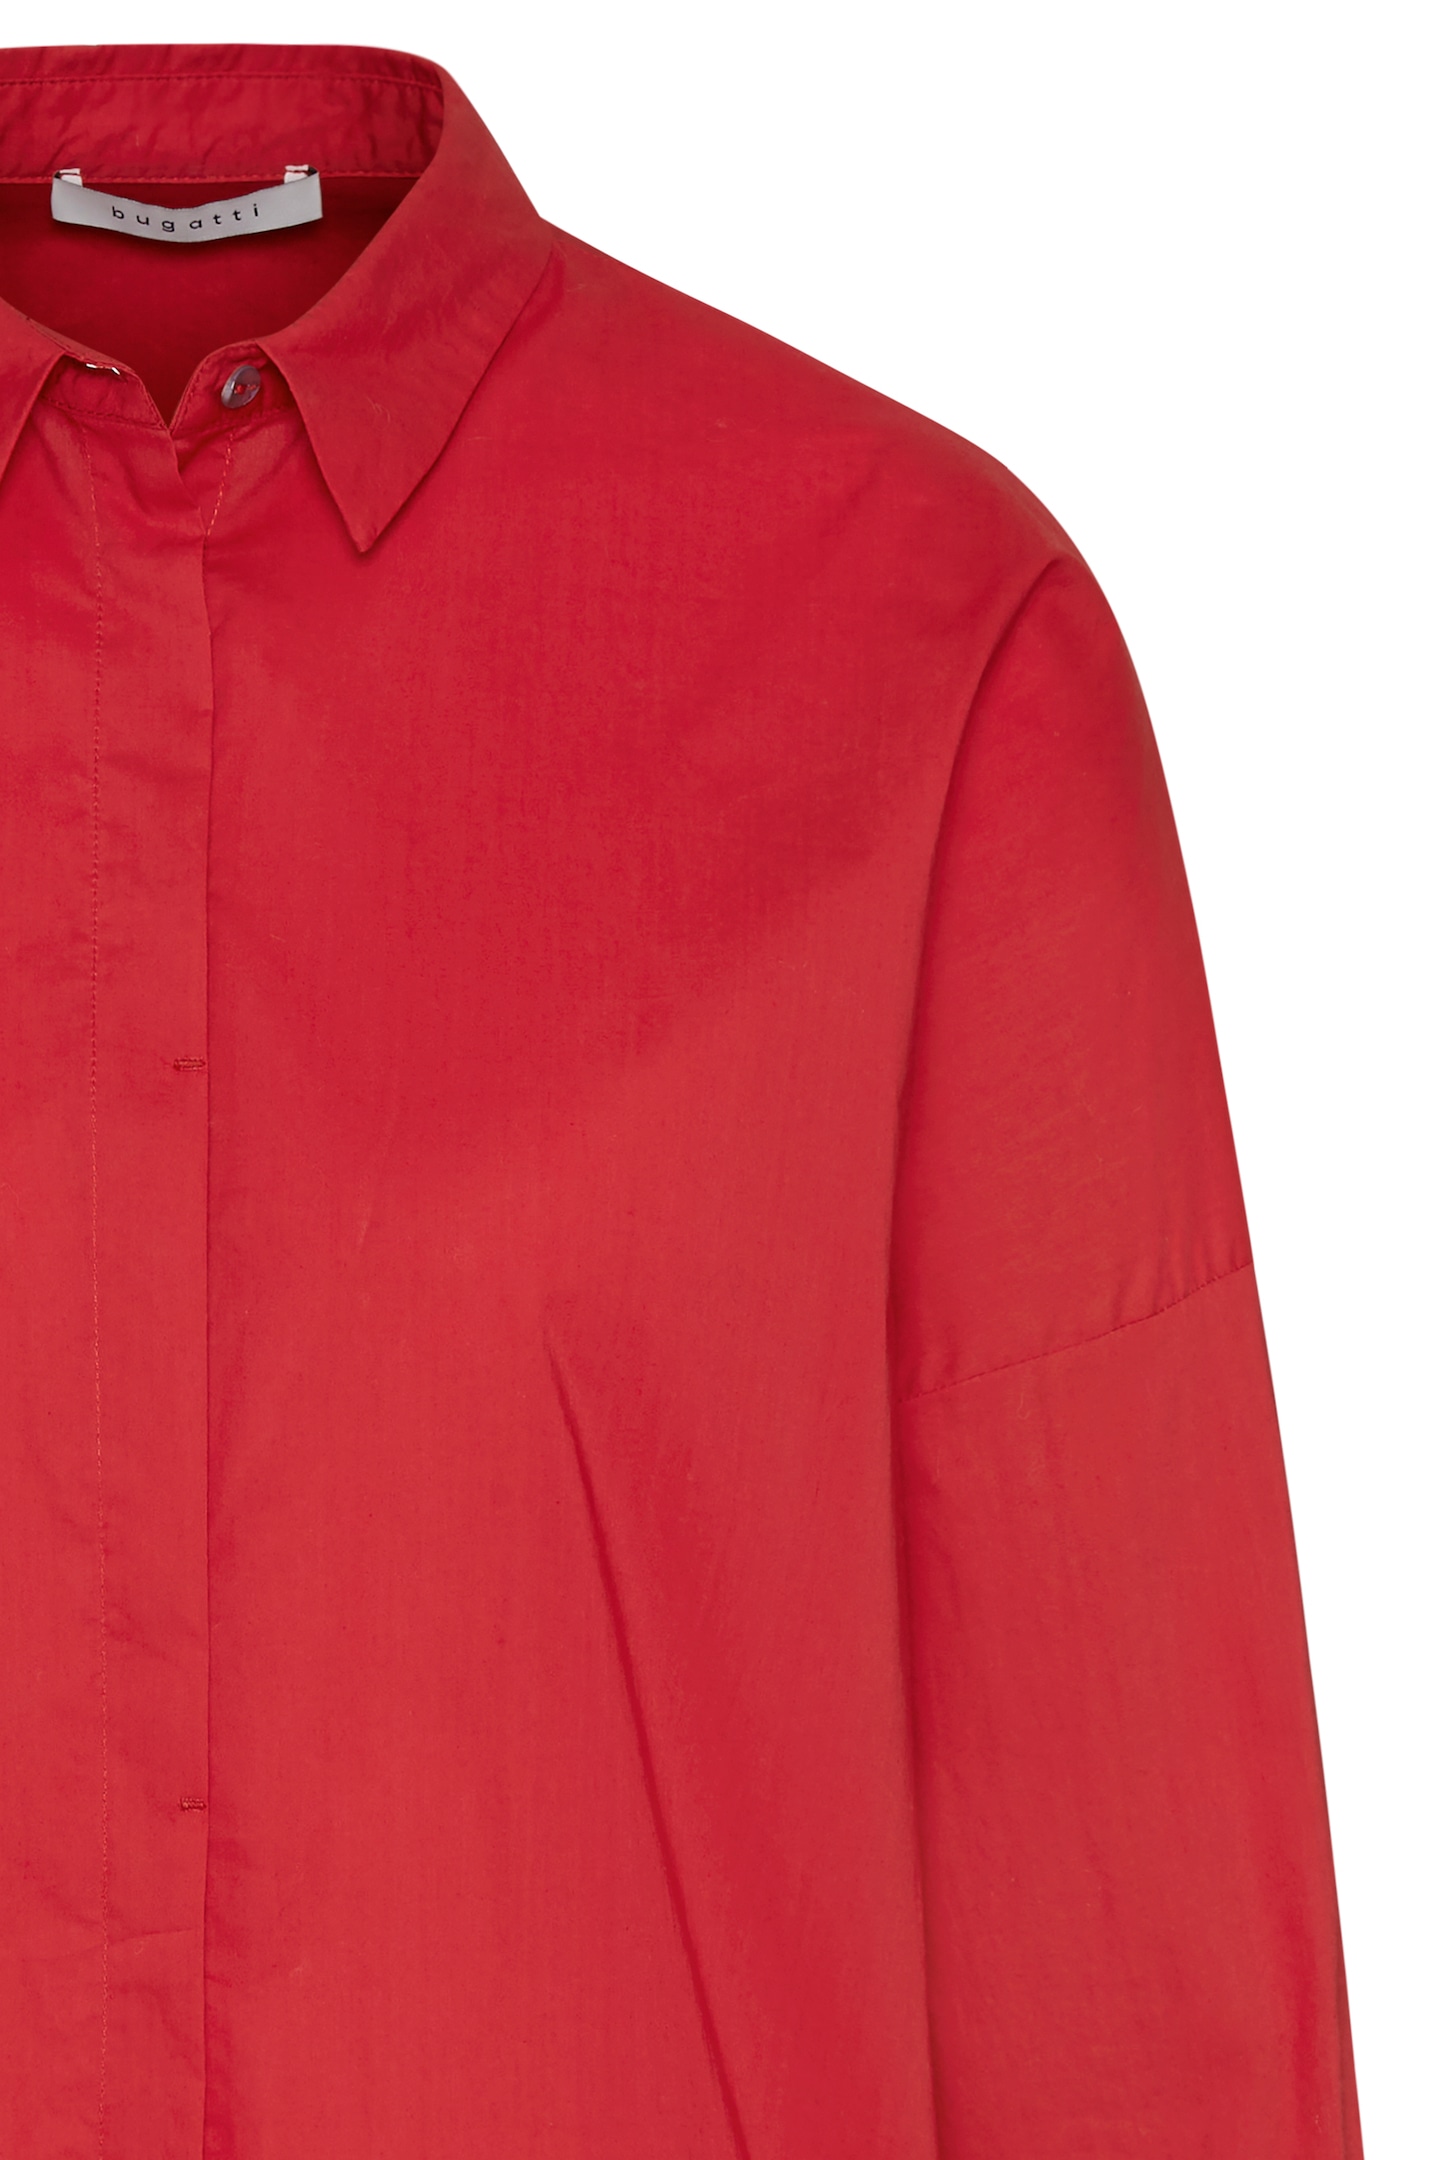 bugatti Langarmbluse in schöner roten Farbe | Blusenkleider